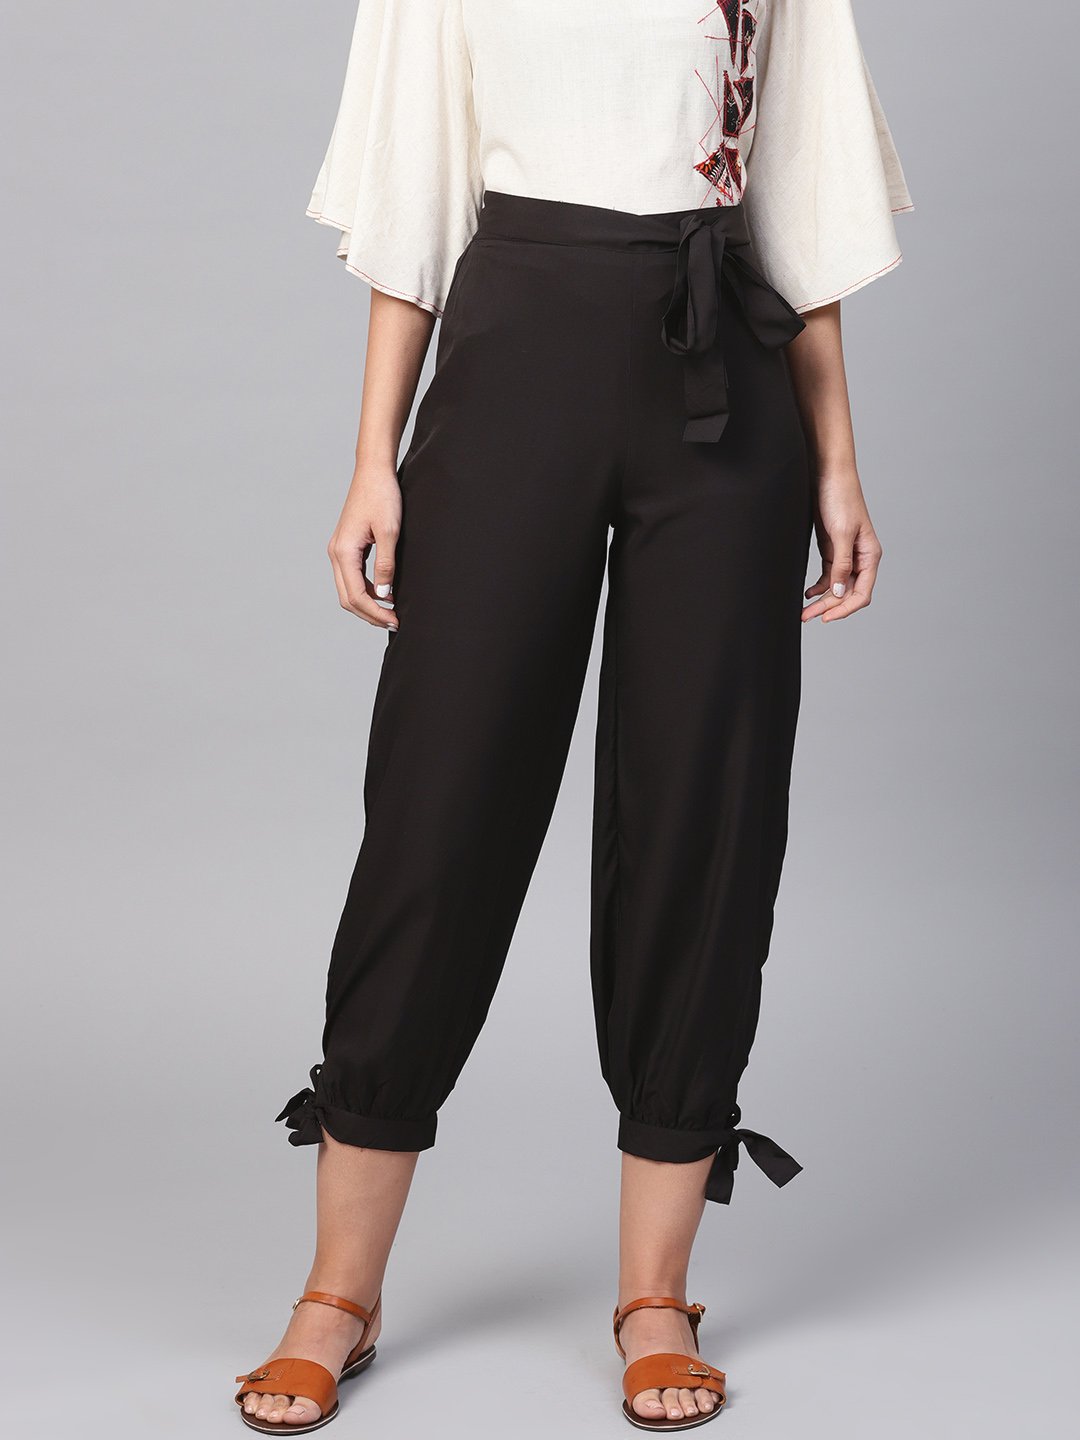 Women's Solid Black Knot Style Capri Pant - Nayo Clothing